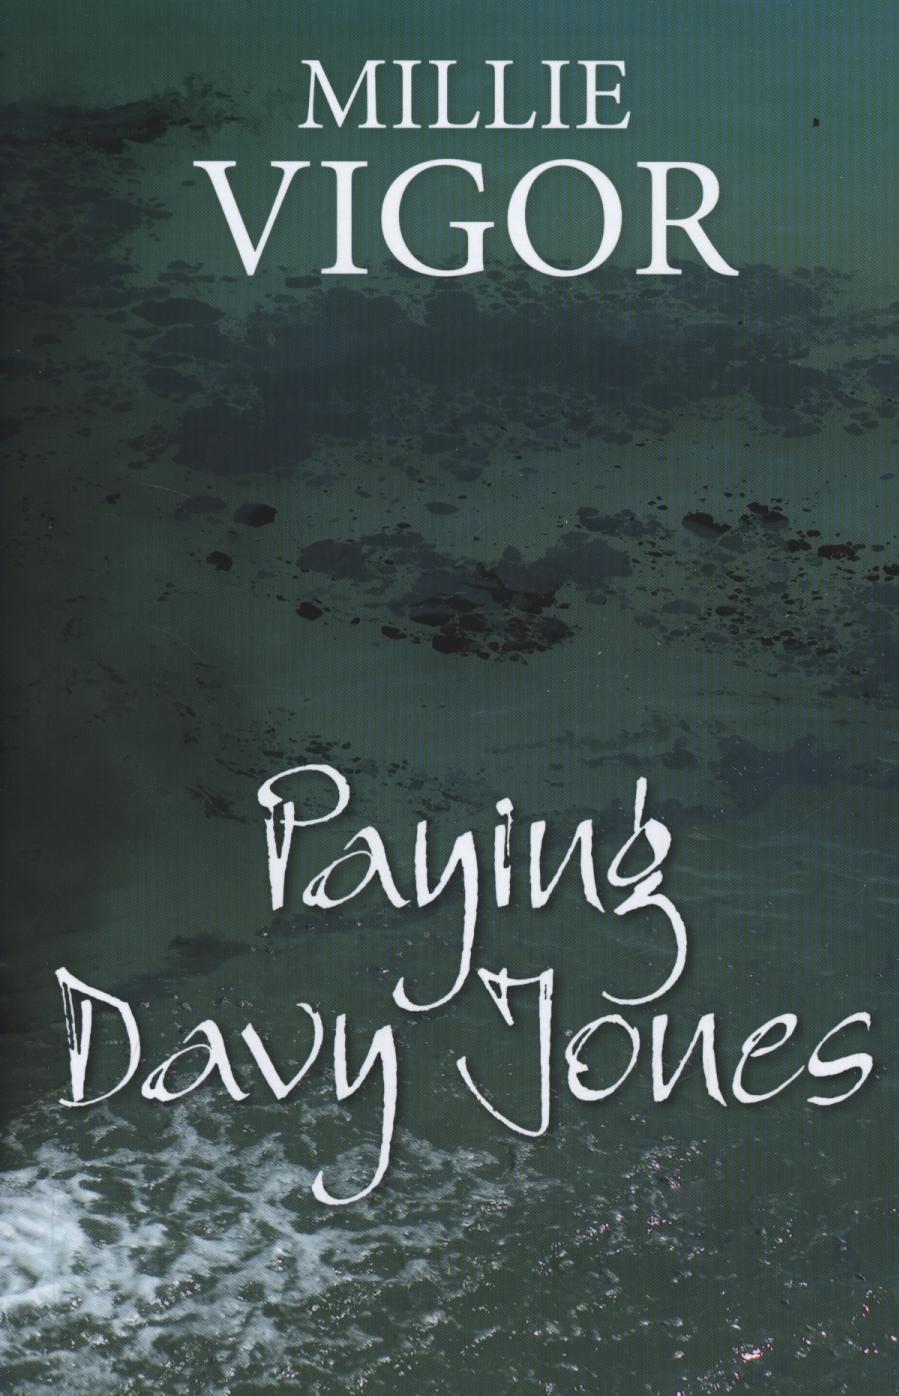 Paying Davy Jones